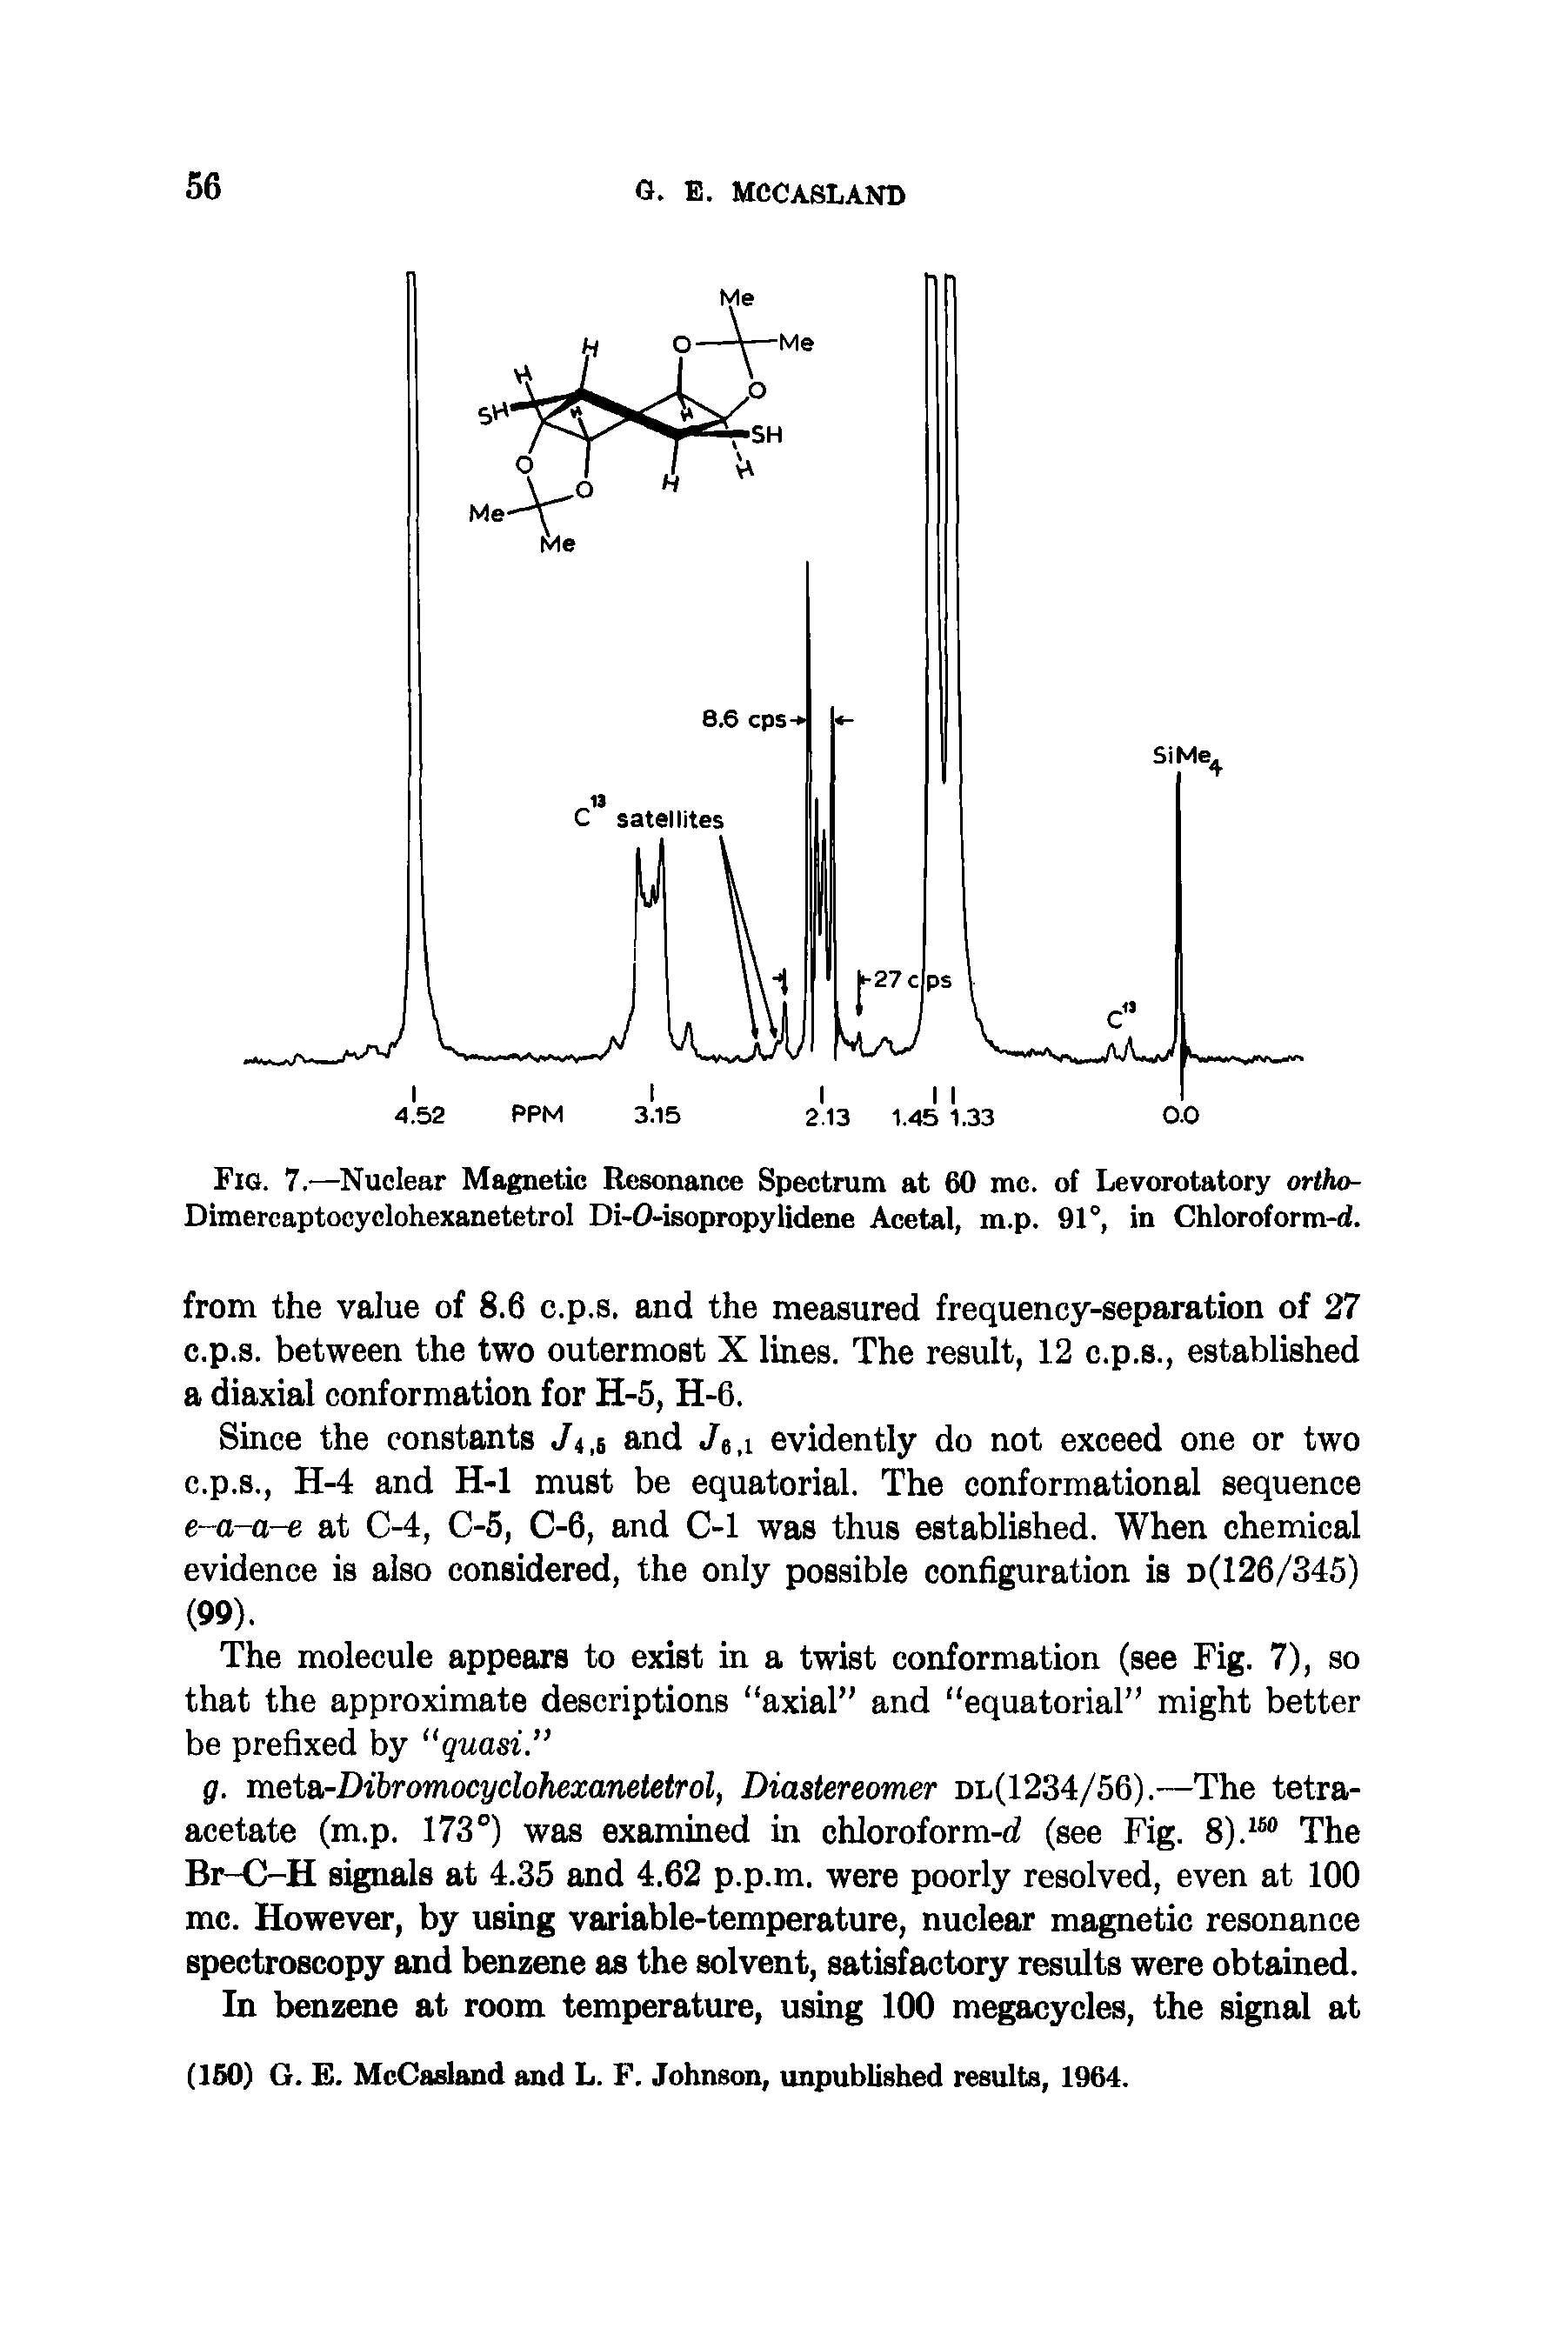 Fig. 7.—Nuclear Magnetic Resonance Spectrum at 60 me. of Levorotatory ortho-Dimercaptocyclohexanetetrol Di-O-isopropylidene Acetal, m.p. 91°, in Chloroform-d.